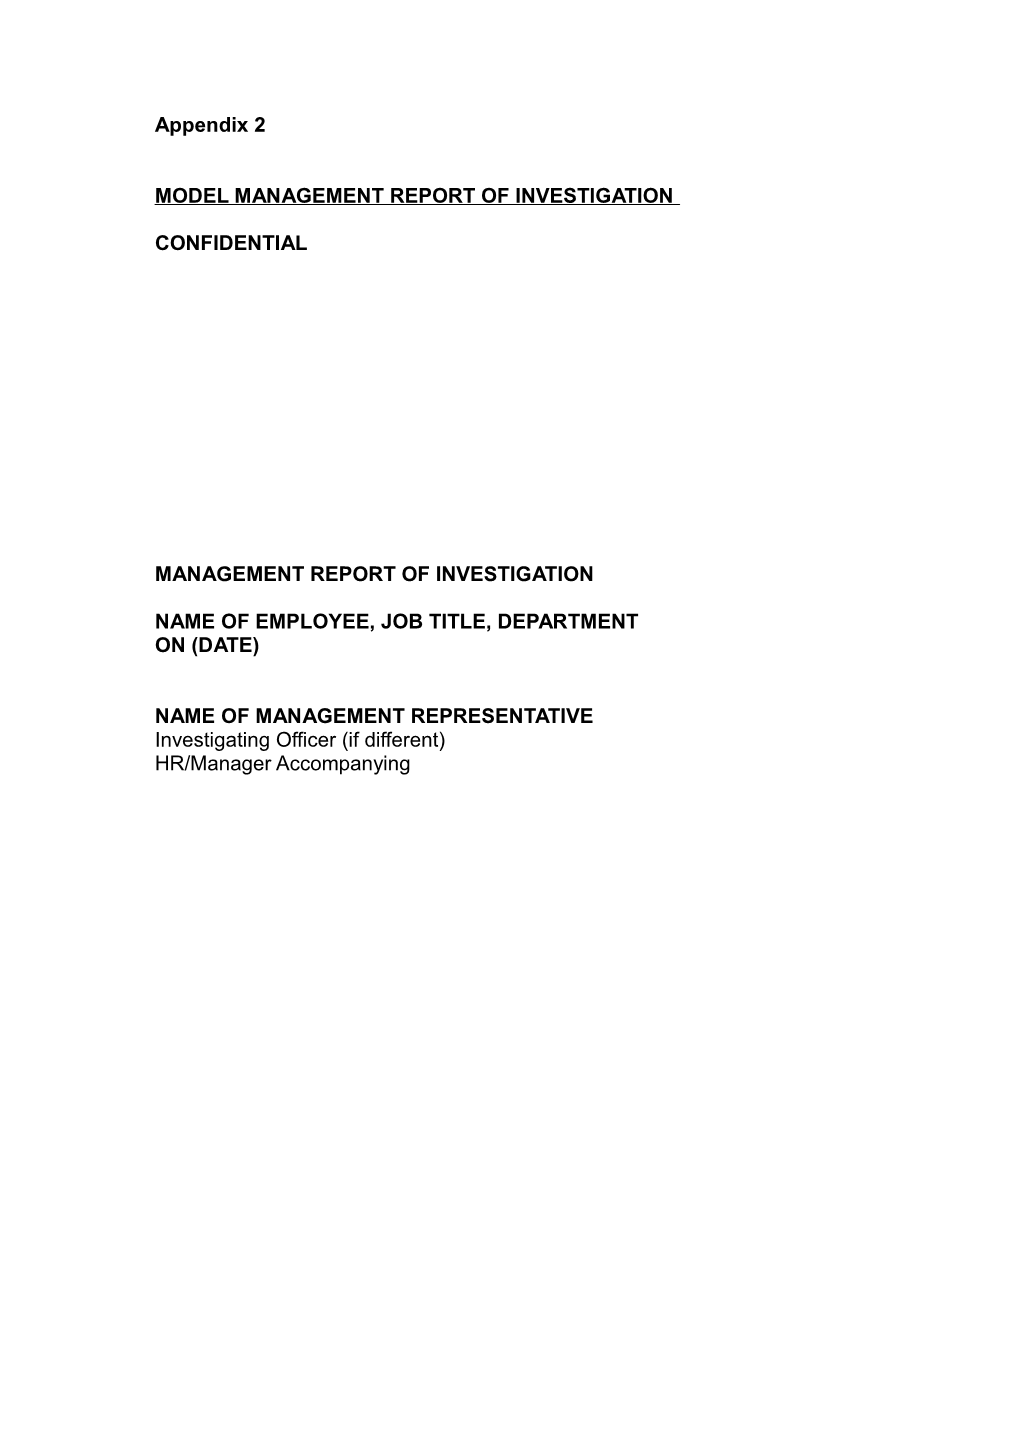 Model Management Report of Investigation